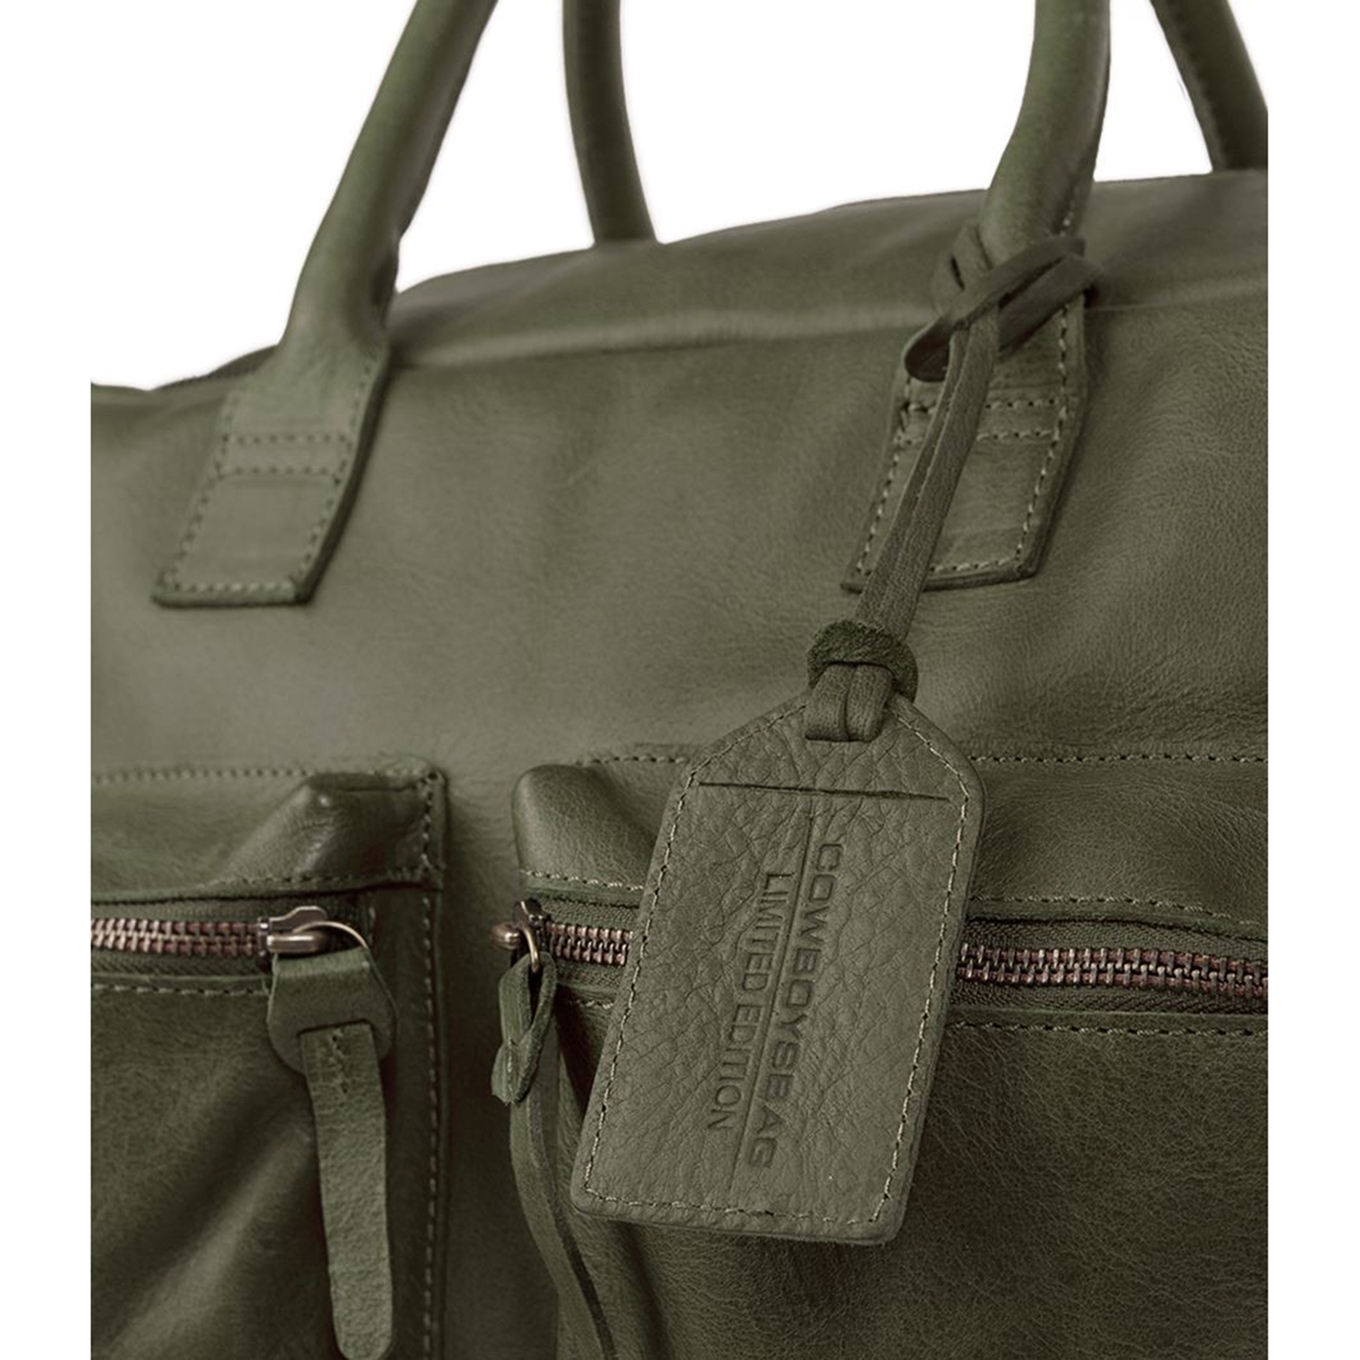 Veeg alledaags maart Cowboysbag The Bag Special Schoudertas forest green | Travelbags.nl